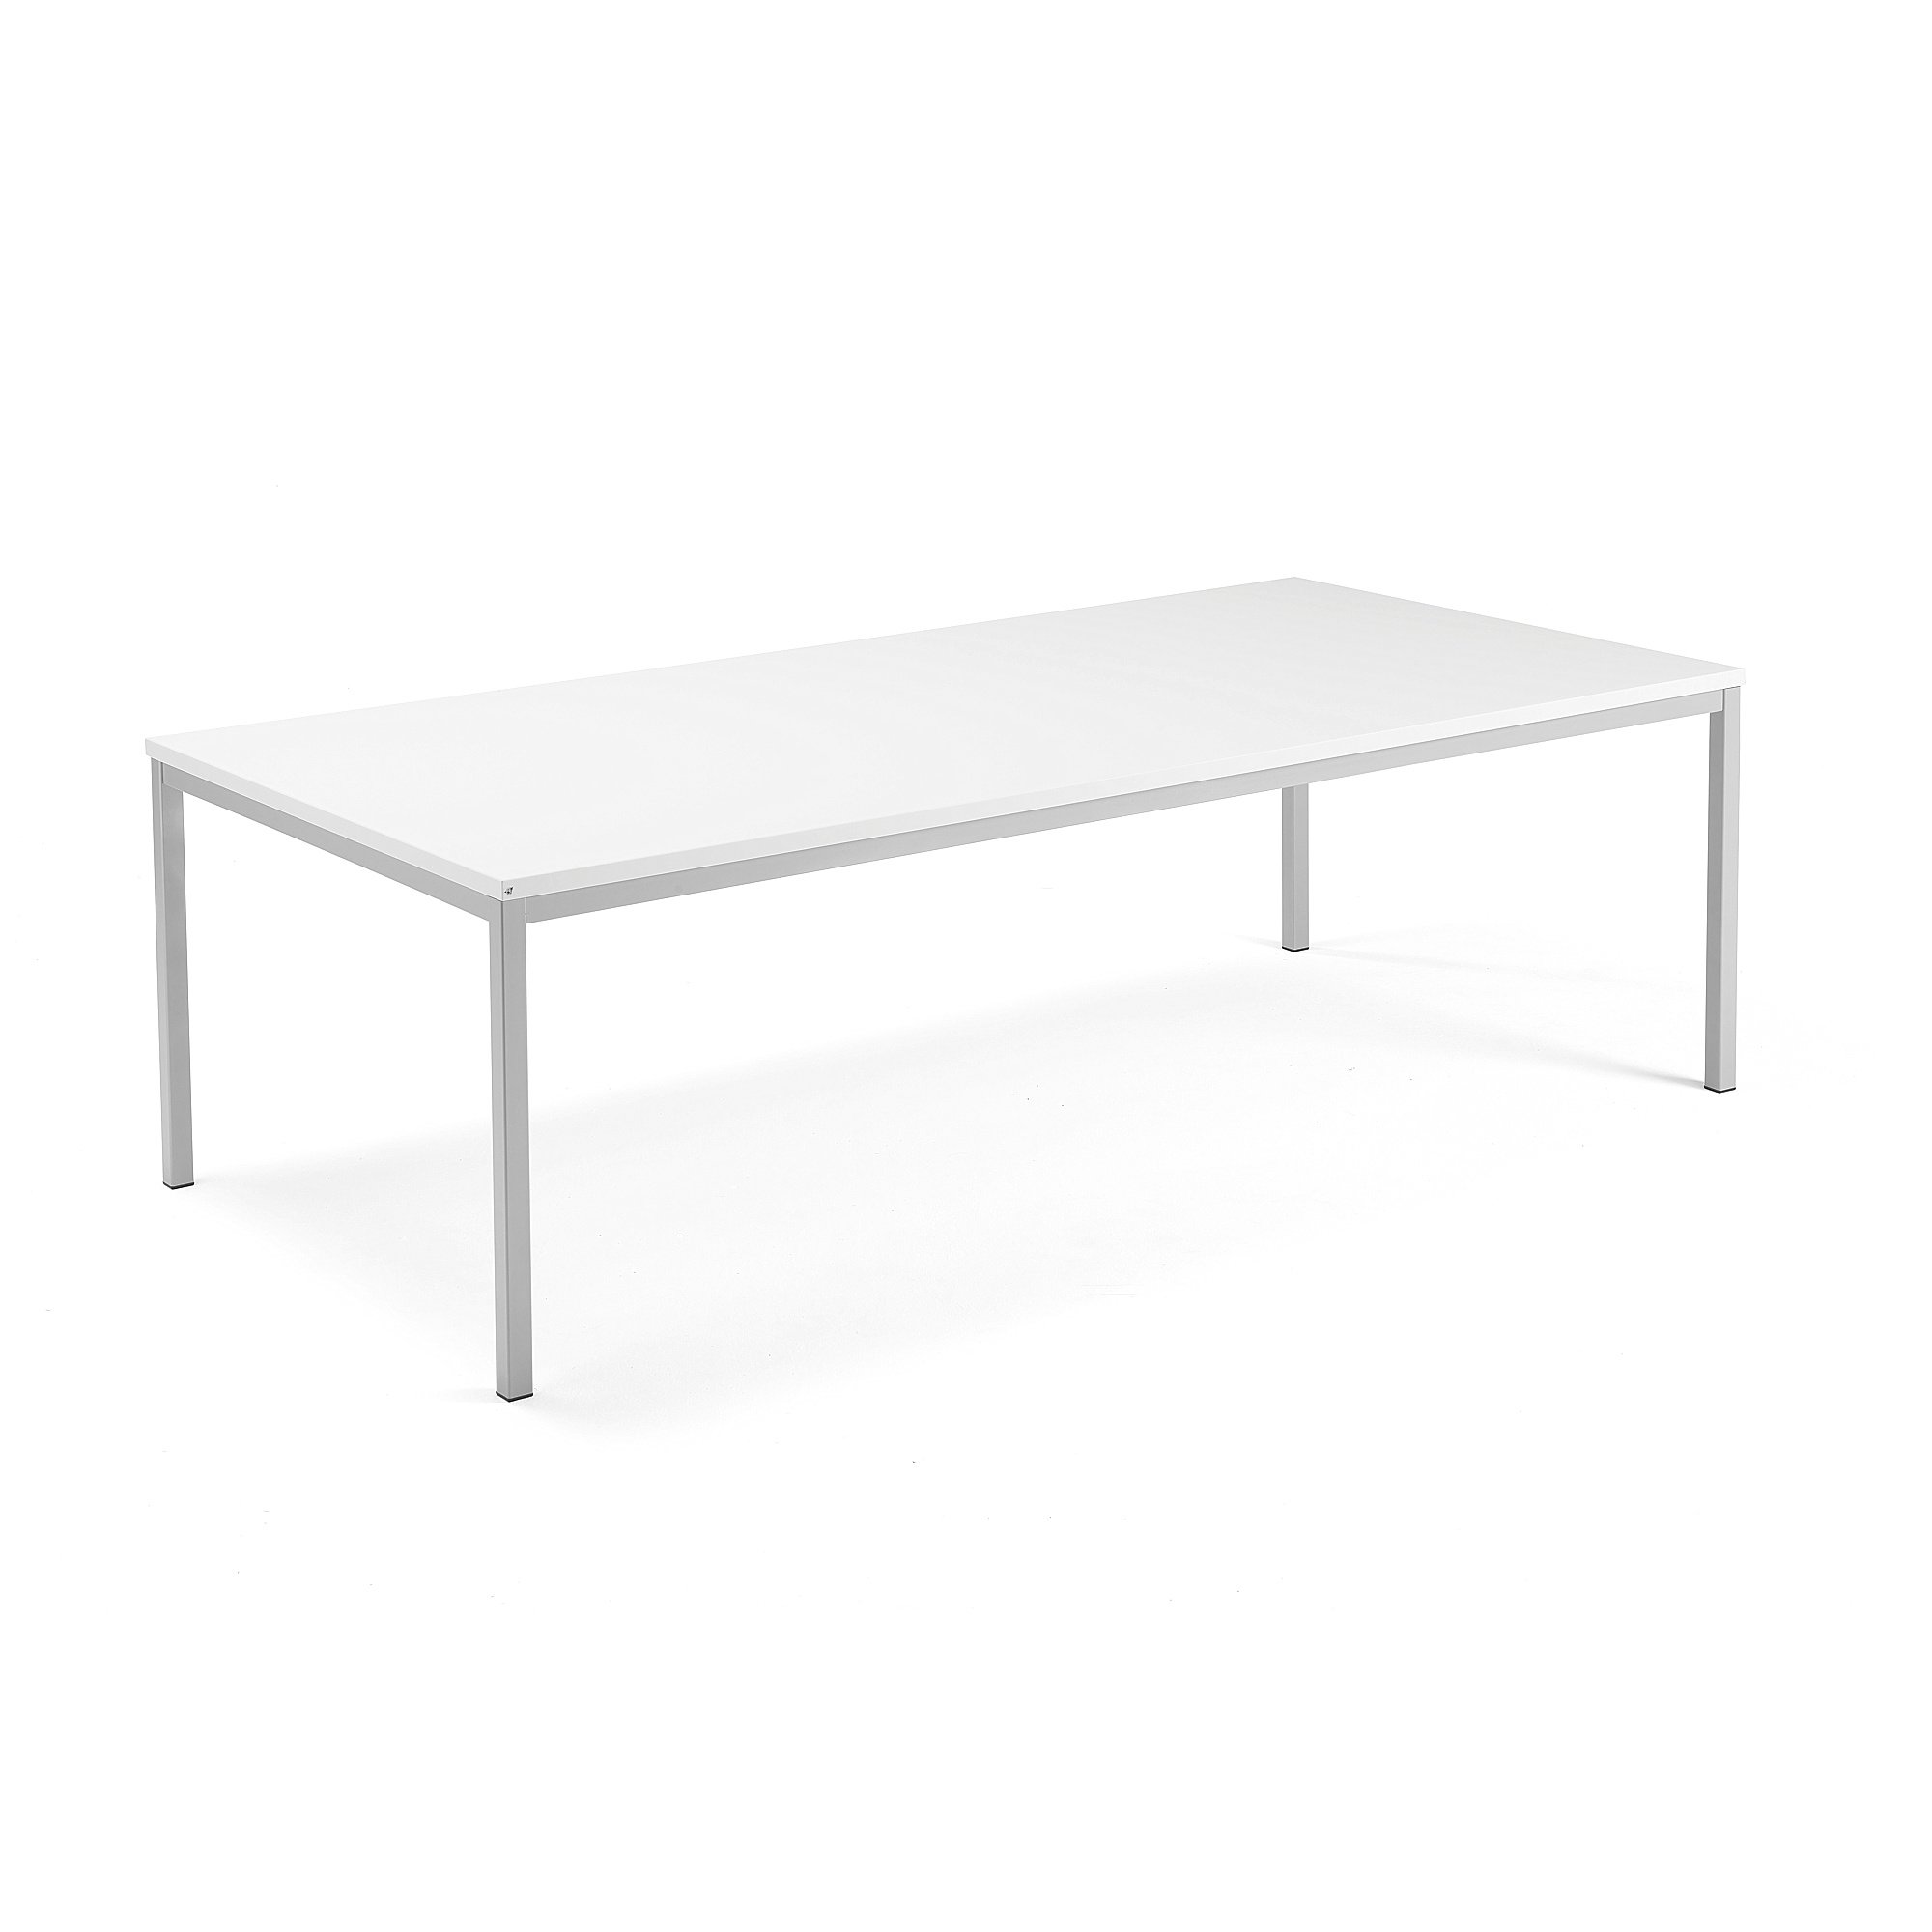 Jednací stůl QBUS, 2400x1200 mm, 4 nohy, stříbrný rám, bílá